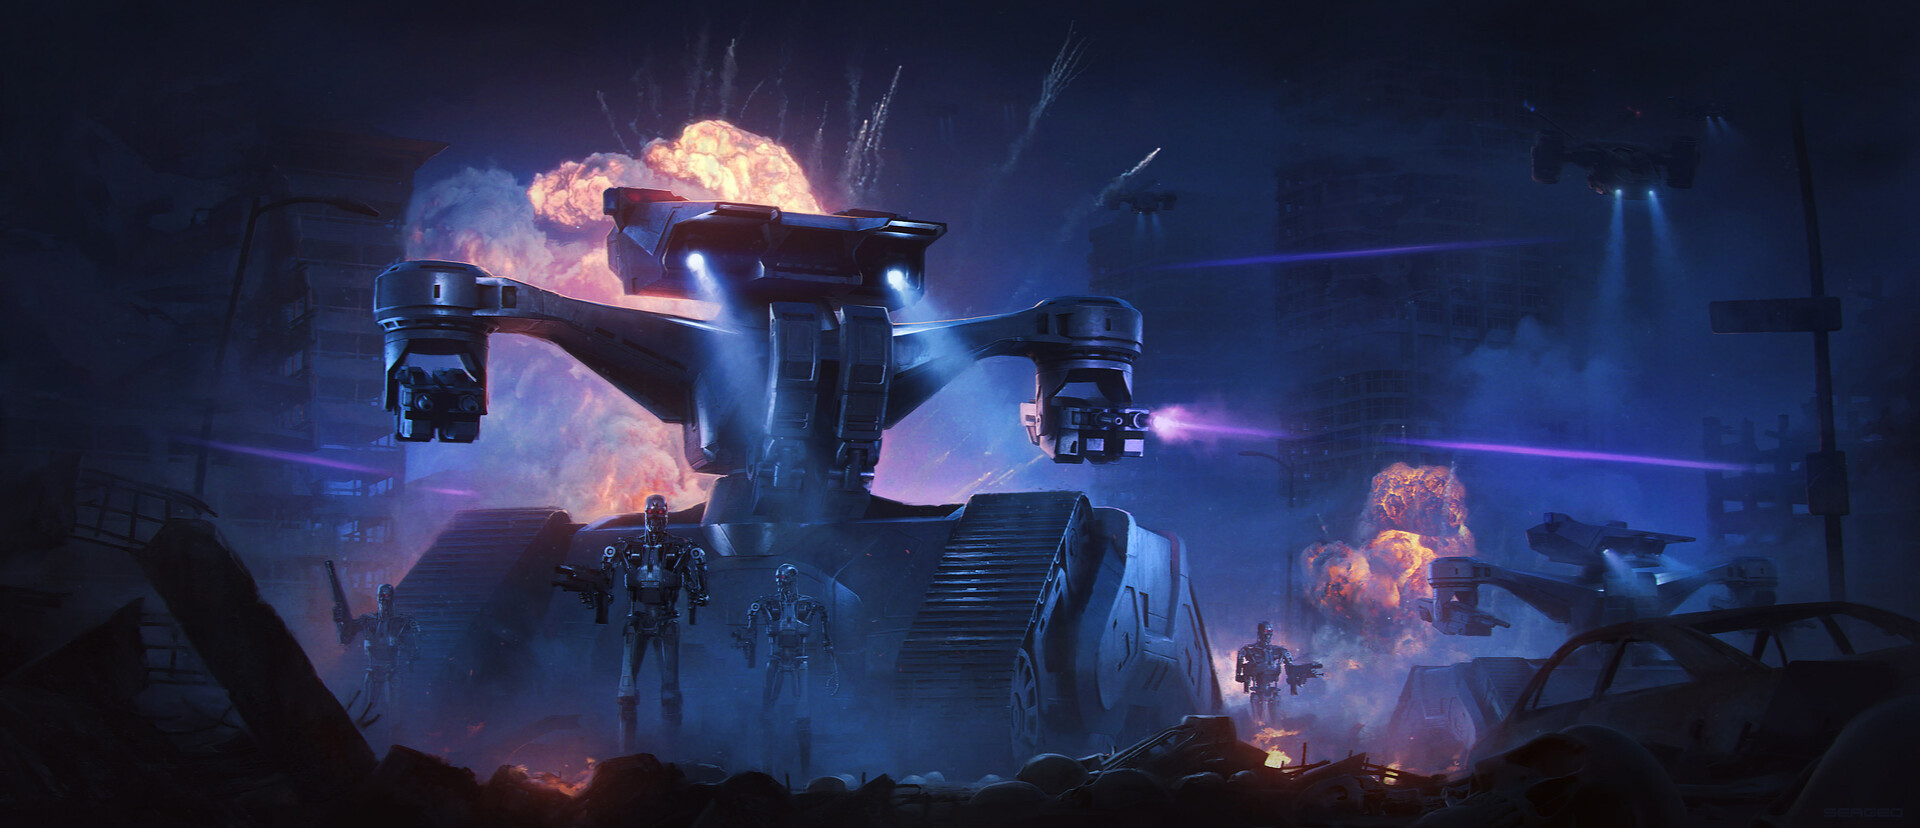 Sci Fi Terminator Art by Sergey Orlyansky